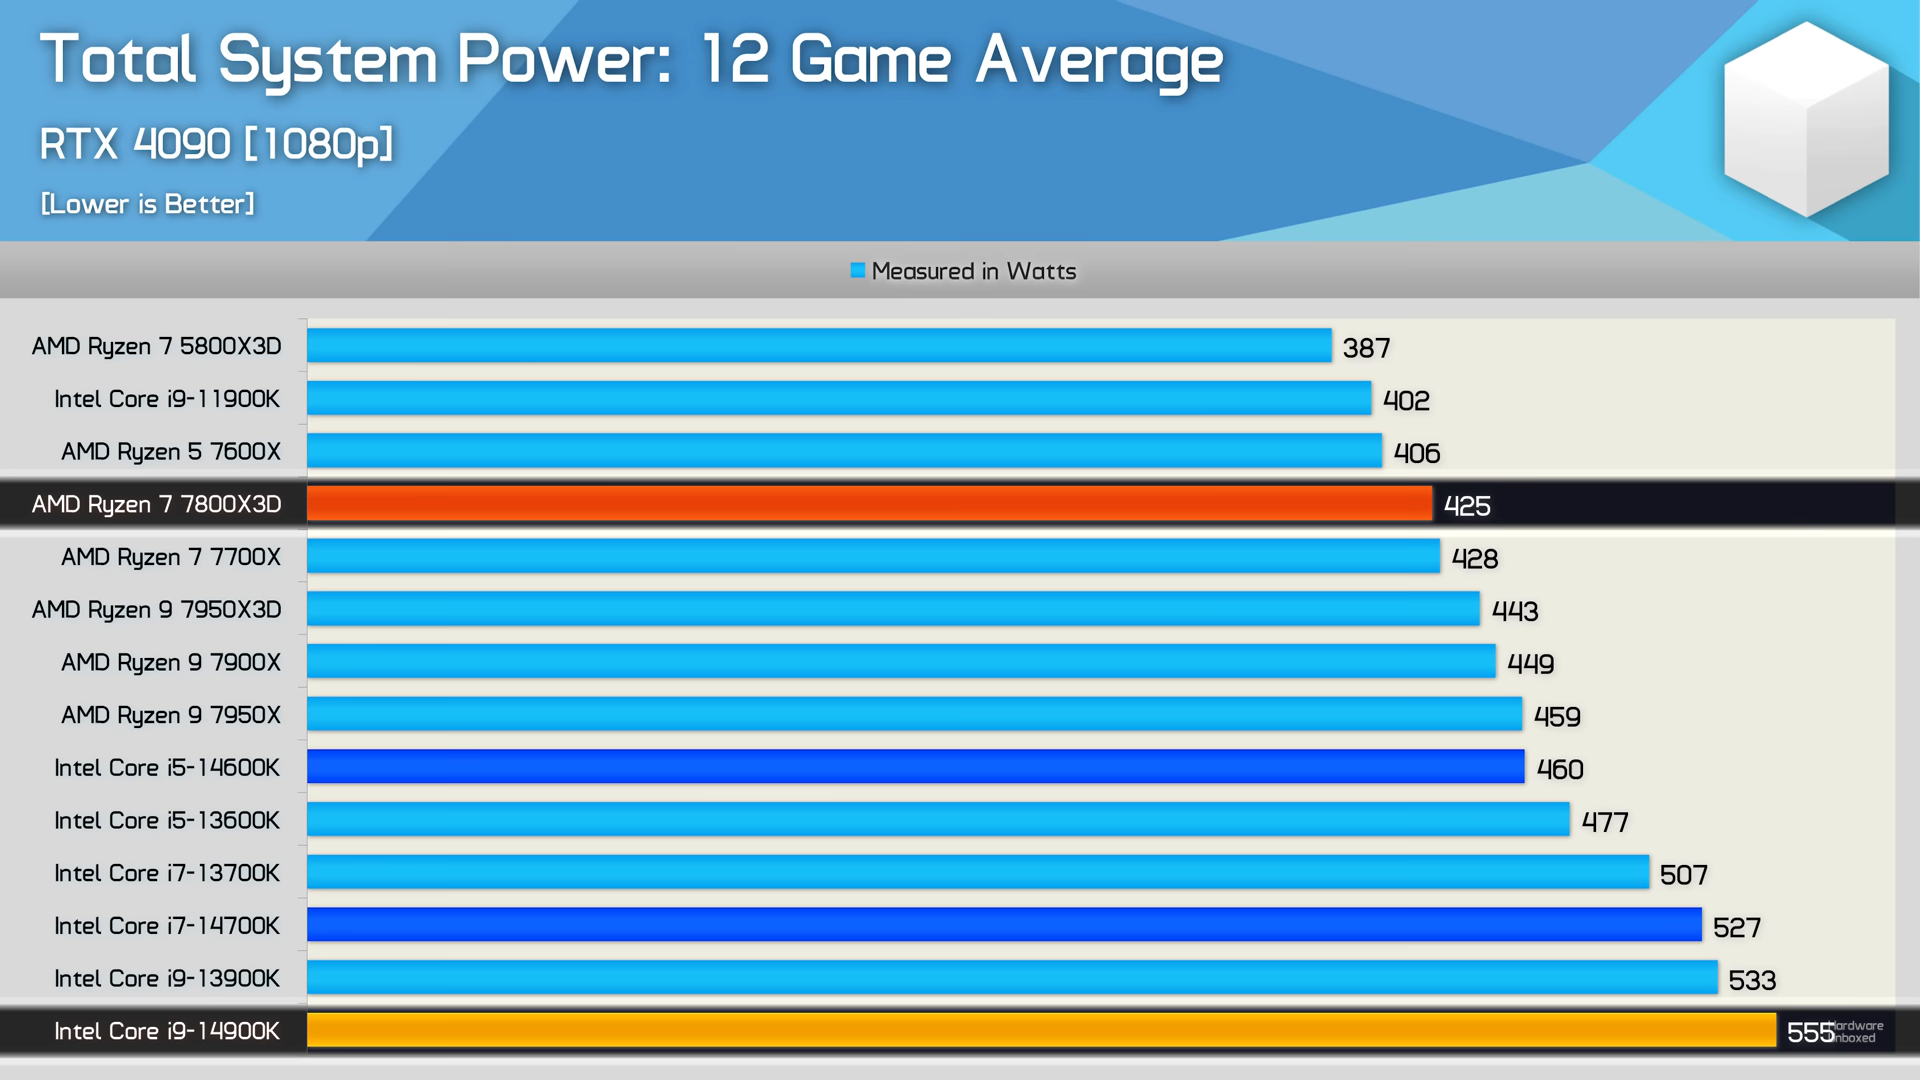 Intel Core i9-14900K vs Core i7-14700K: A tough competition